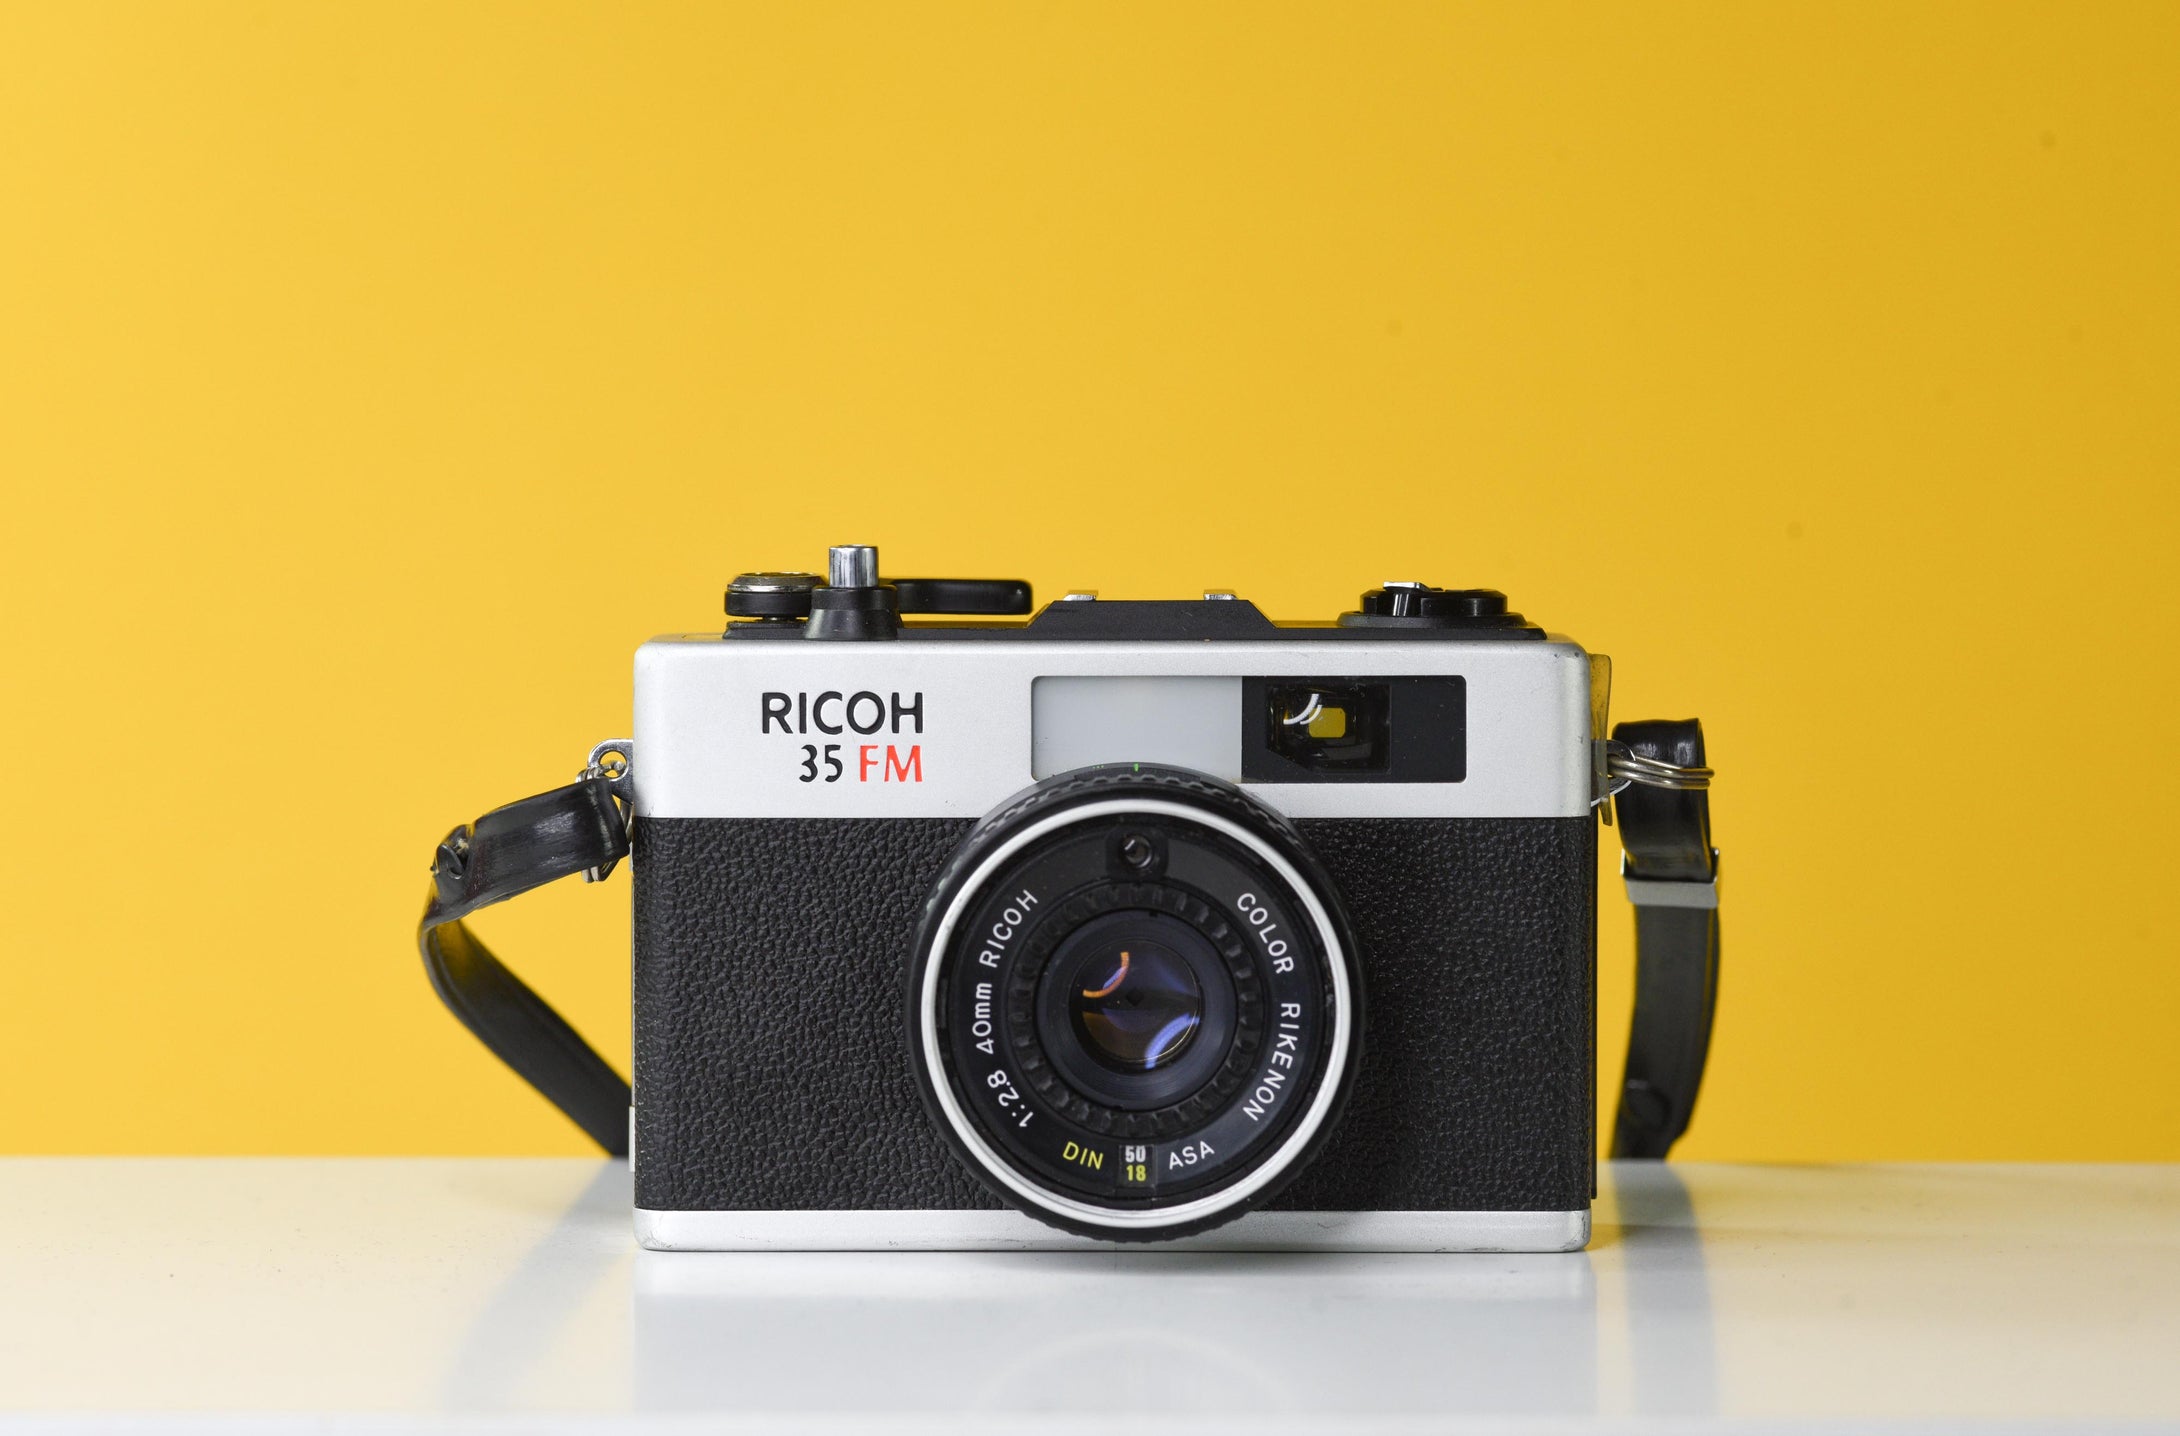 Ricoh 35FM 35mm Film Camera with Rikenon 40mm f/2.8